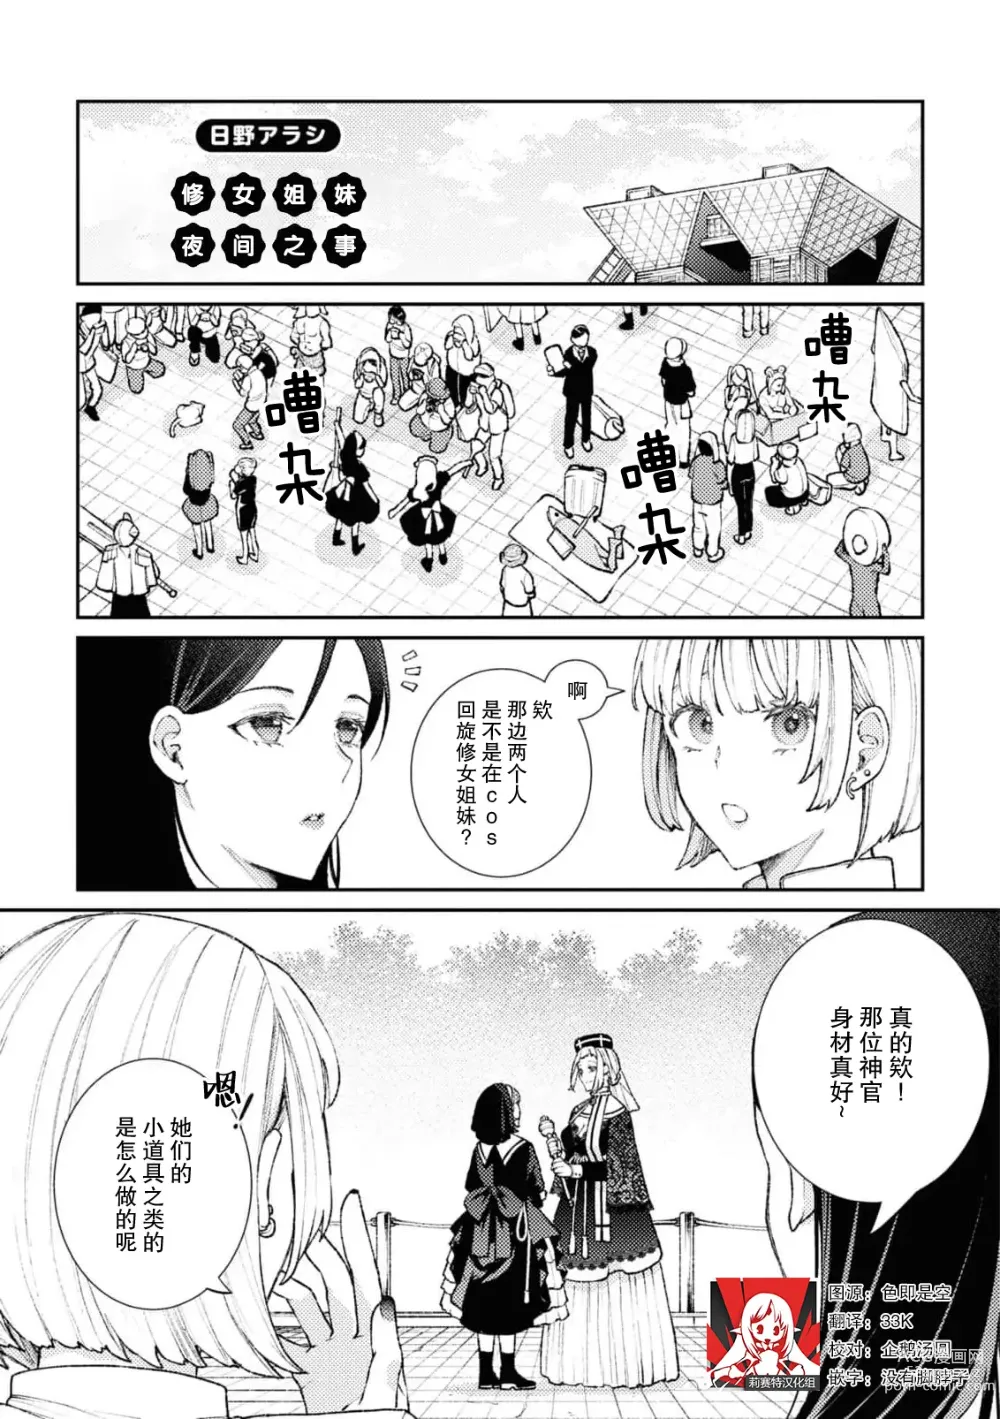 Page 1 of manga 修女姐妹夜间之事